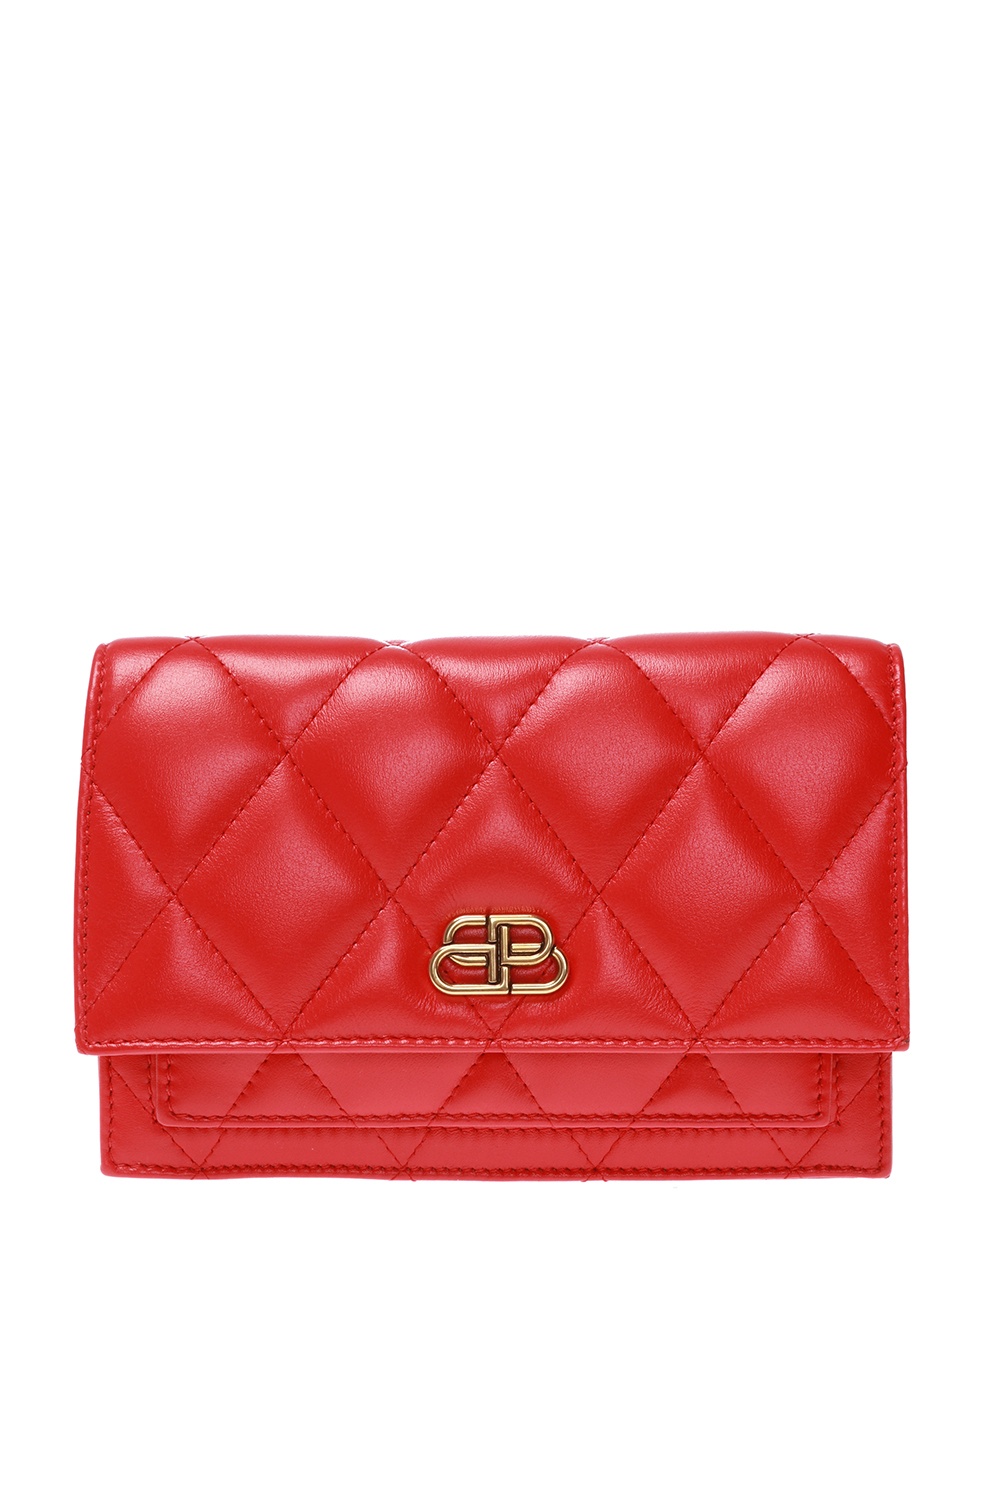 Balenciaga belt bag | Women's Bags | Vitkac